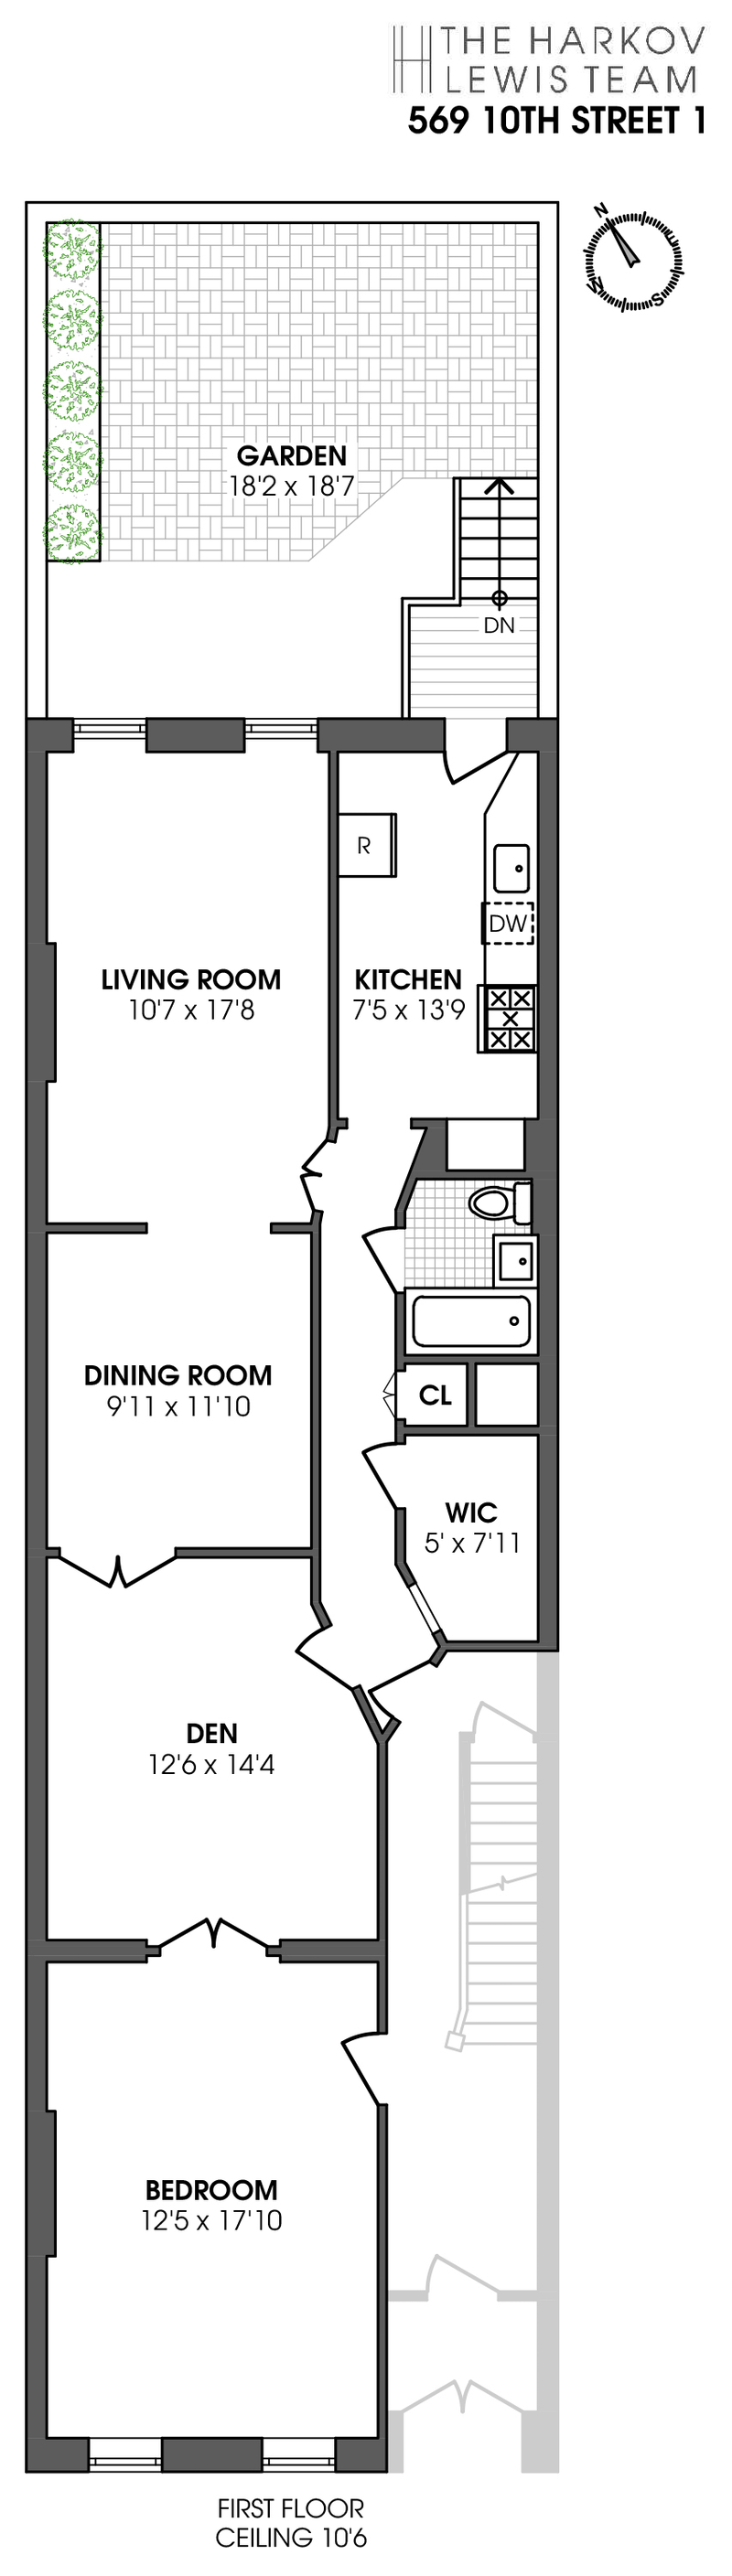 Floorplan for 569, 10th Street, 1